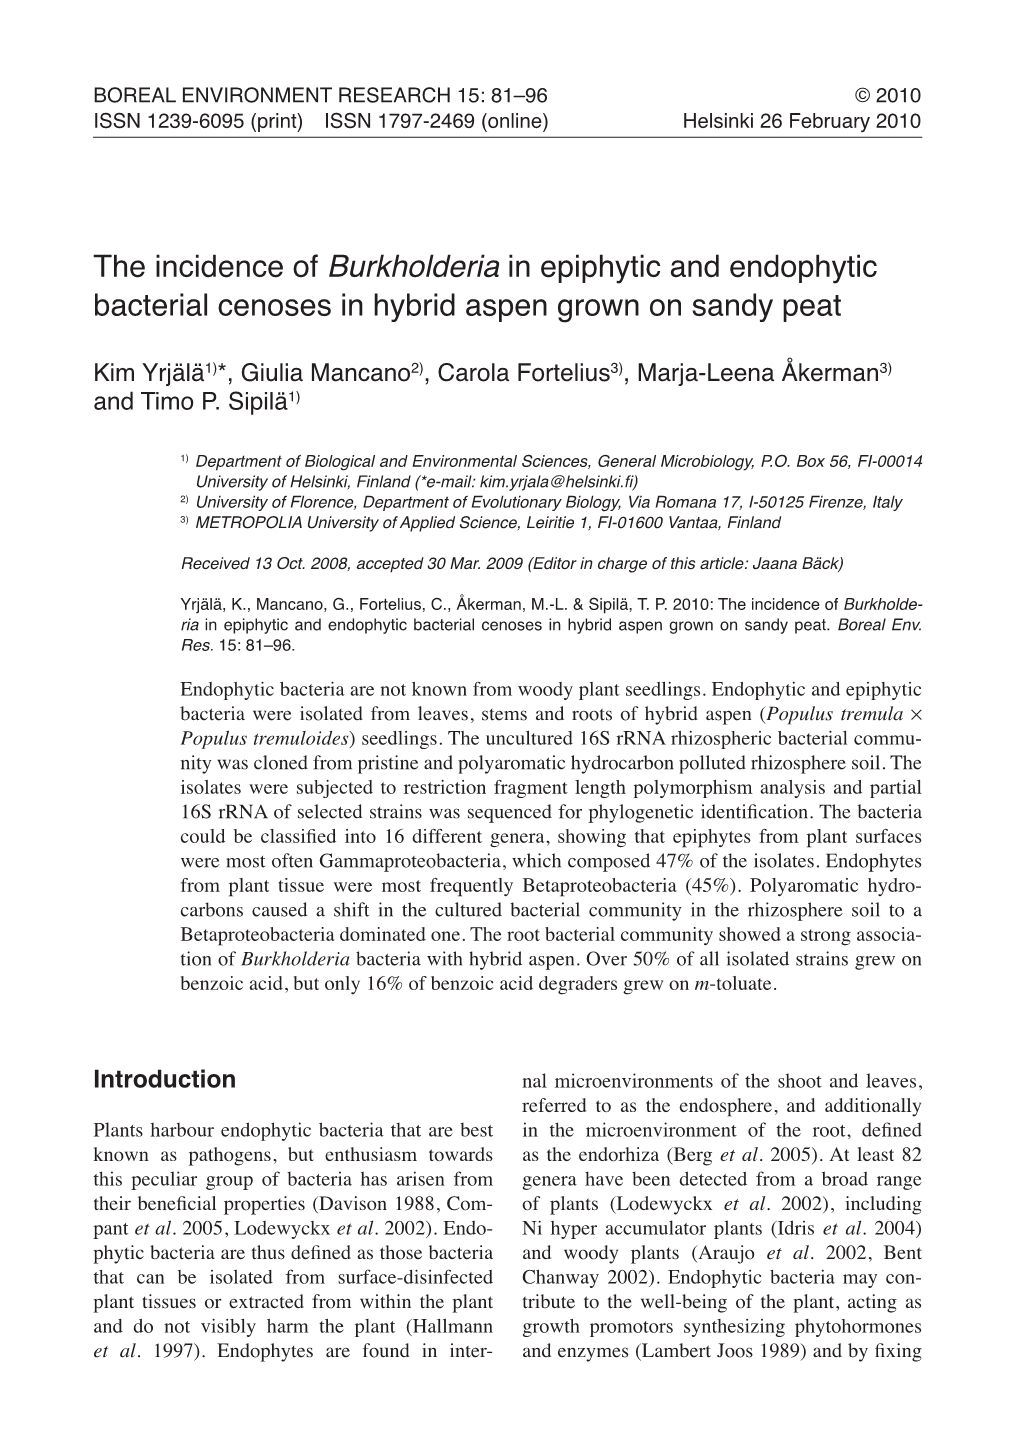 The Incidence of Burkholderia in Epiphytic and Endophytic Bacterial Cenoses in Hybrid Aspen Grown on Sandy Peat